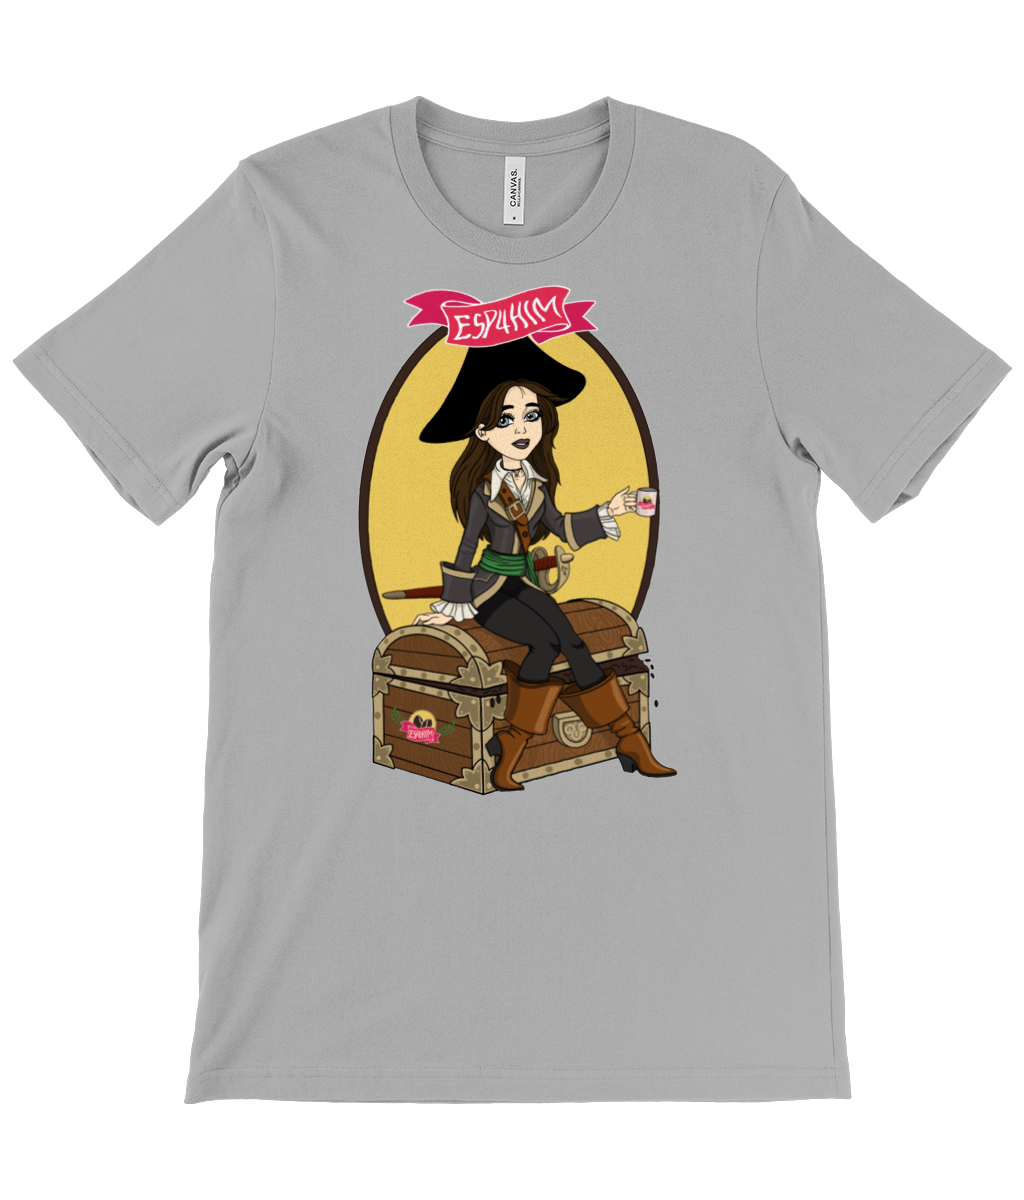 ESP4HIM 'Coffee Hoarding Pirate' Crew Neck T-Shirt